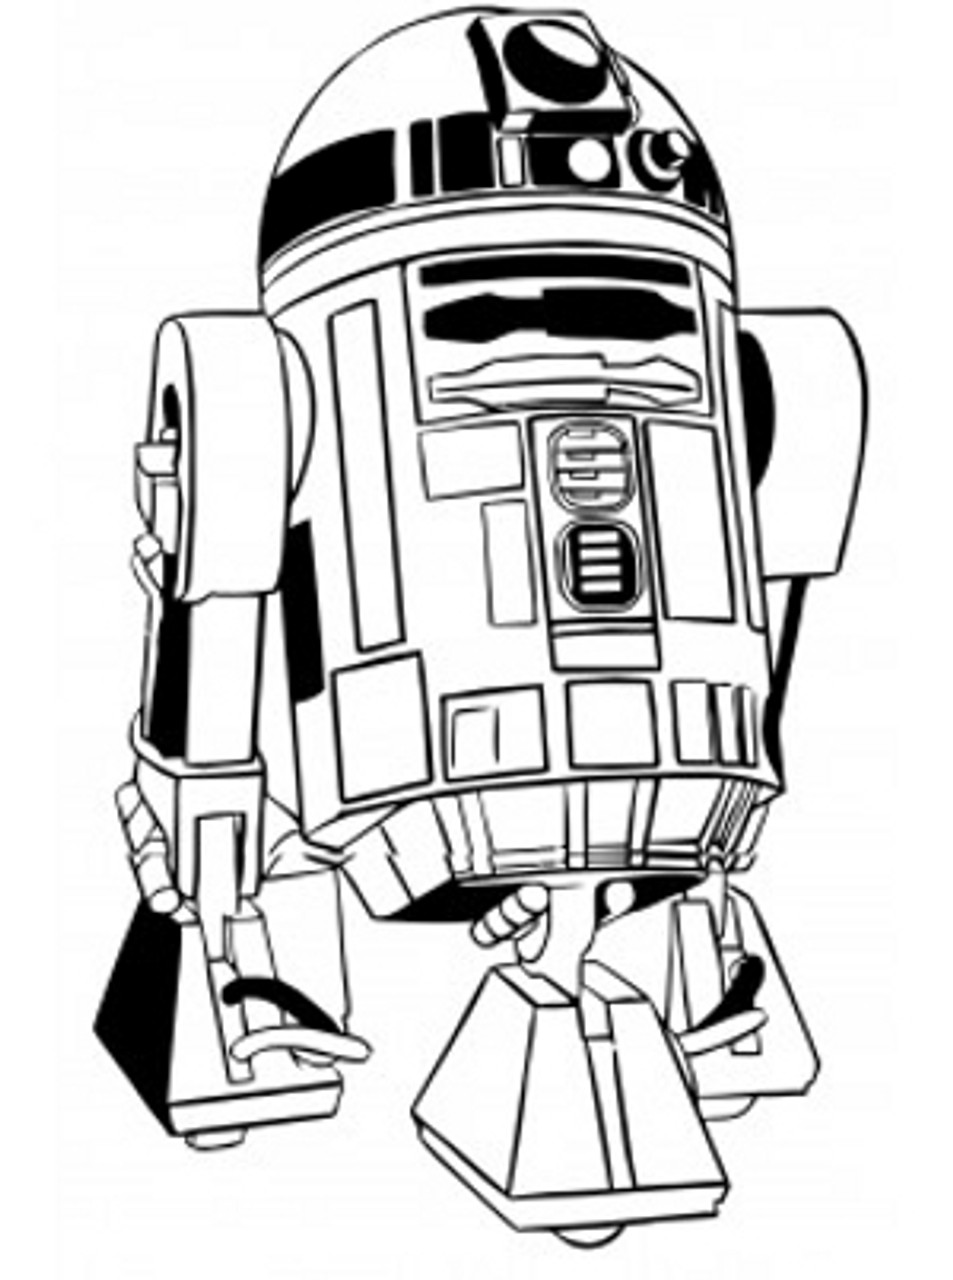 Sticker Star Wars - R2D2